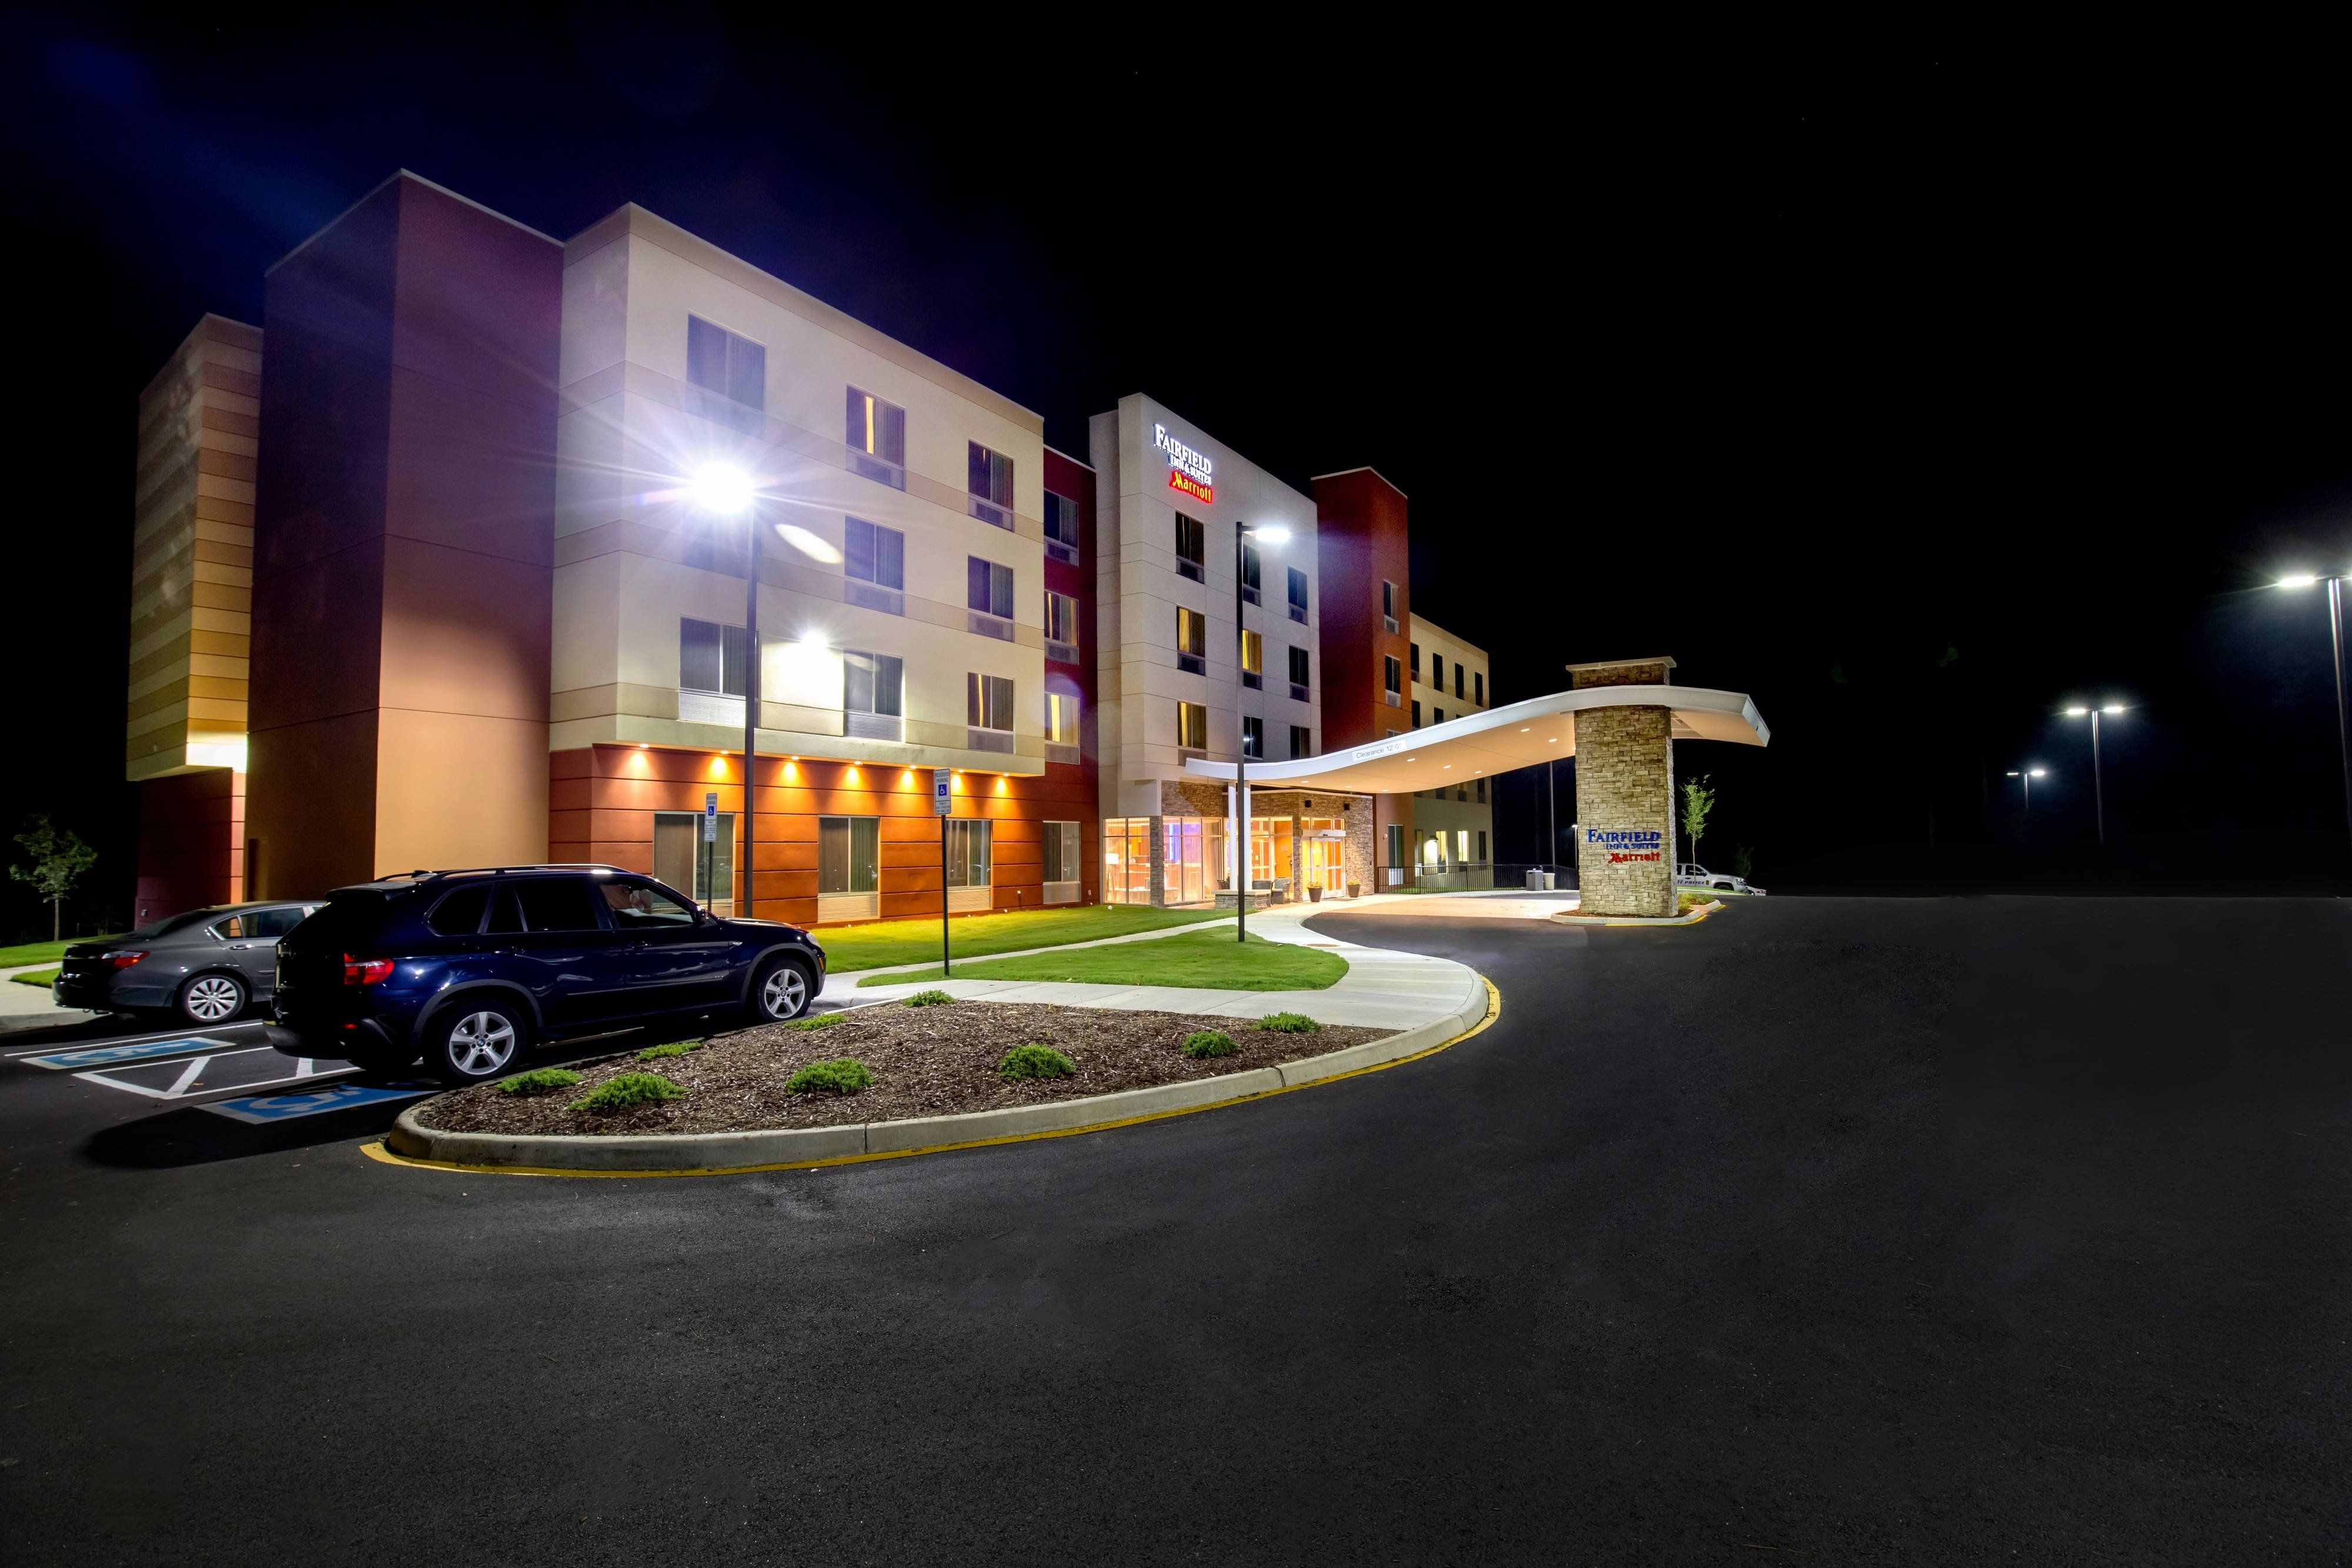 Hotel SpringHill Suites Richmond Northwest, USA - www.trivago.com